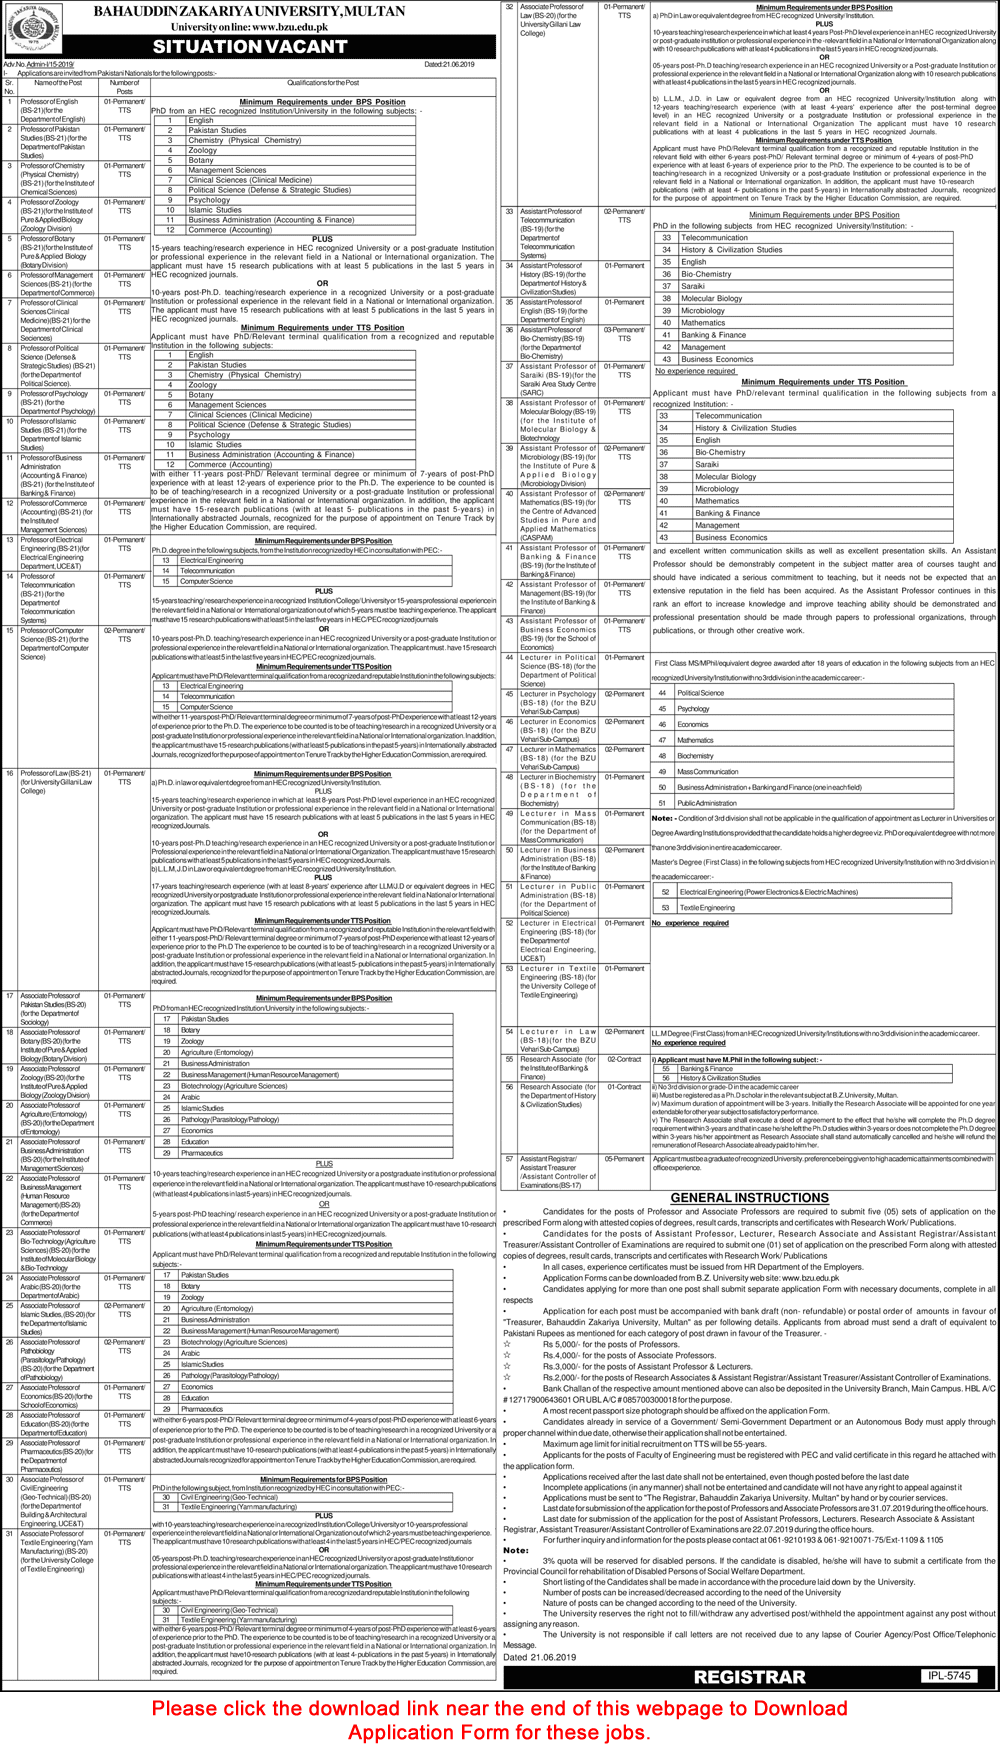 Bahauddin Zakariya University Karachi Jobs June 2019 July Application Form Teaching Faculty Latest